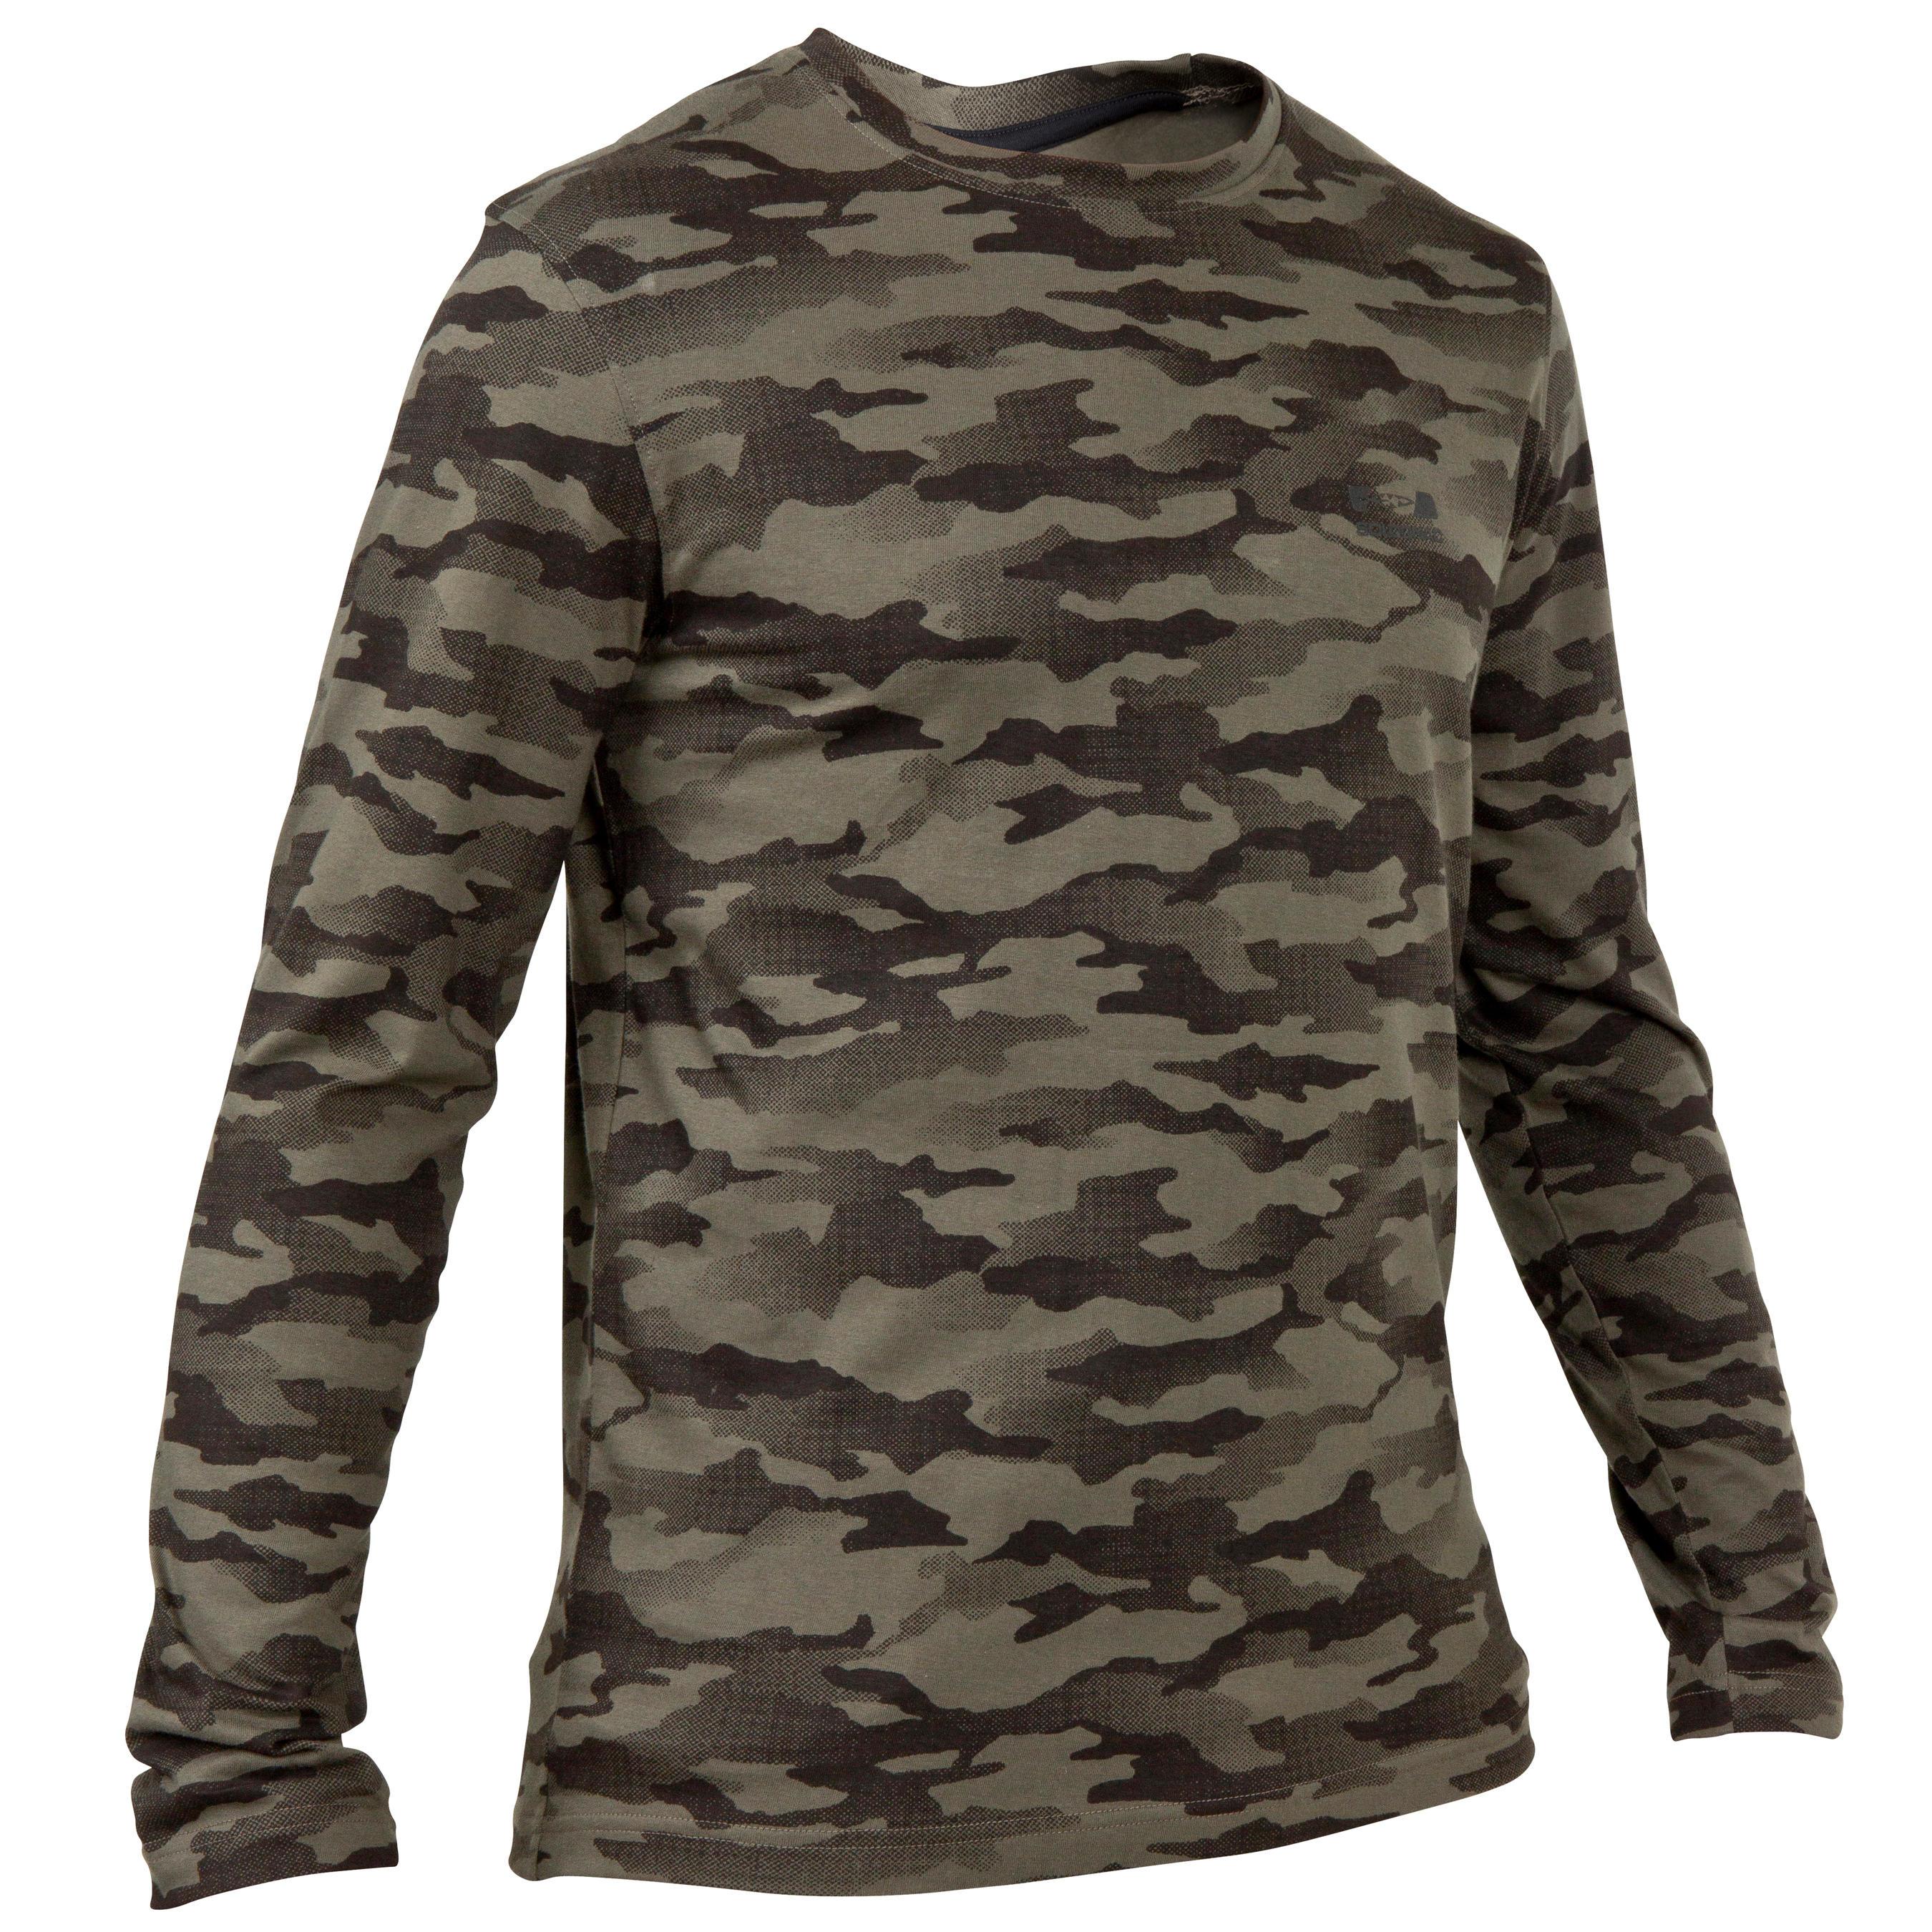 decathlon camouflage t shirt